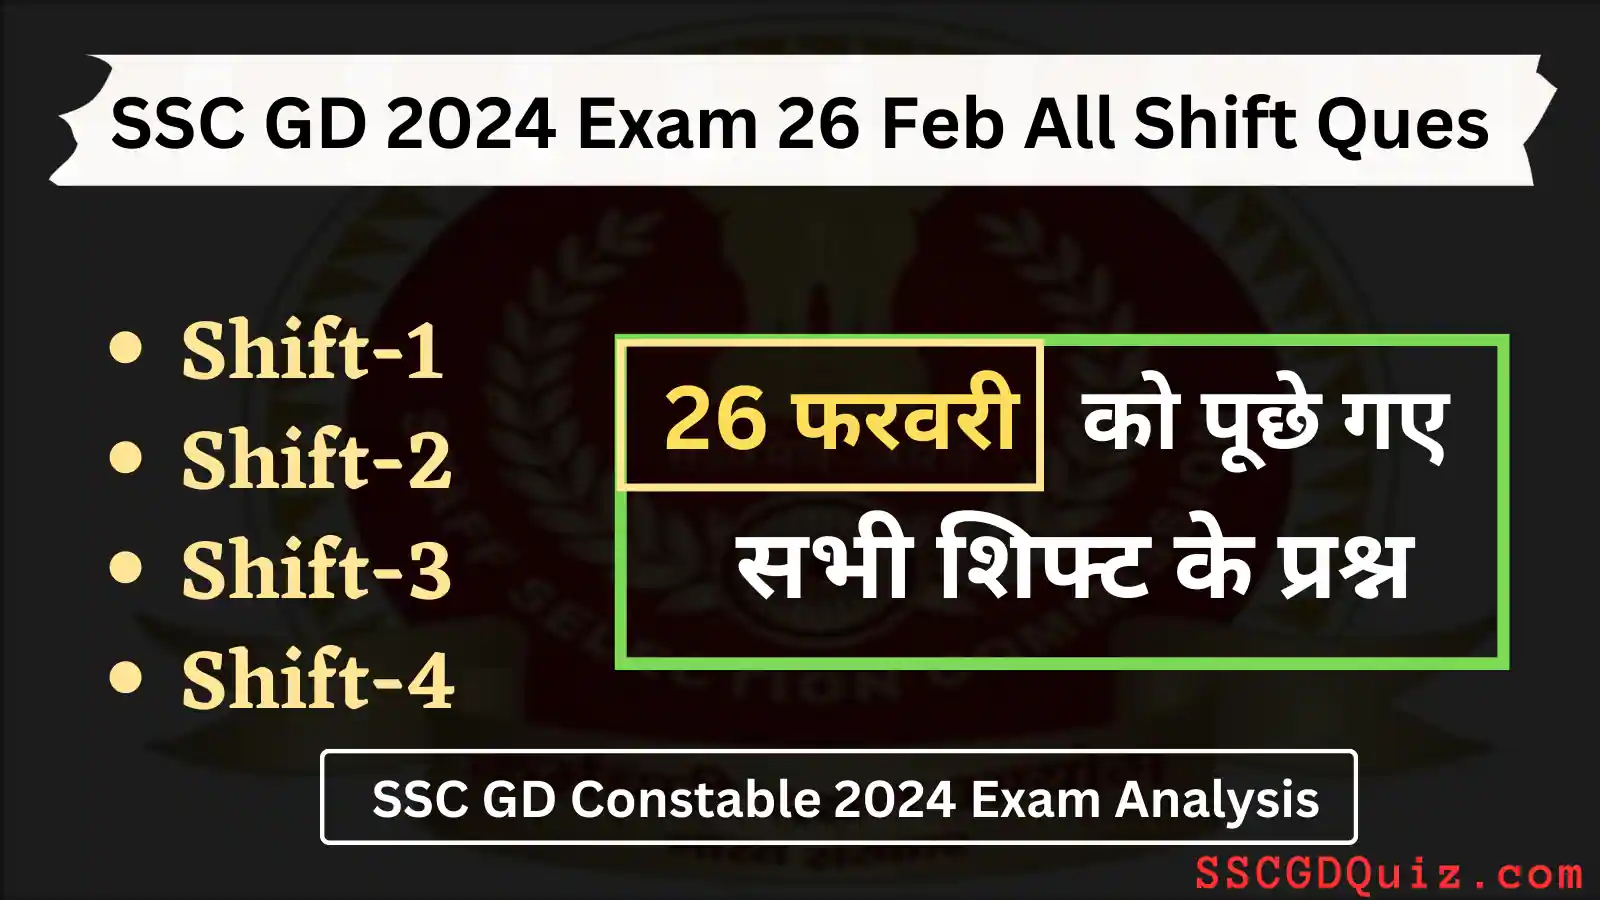 SSC GD 2024 Exam 26 Feb All Shift Ques